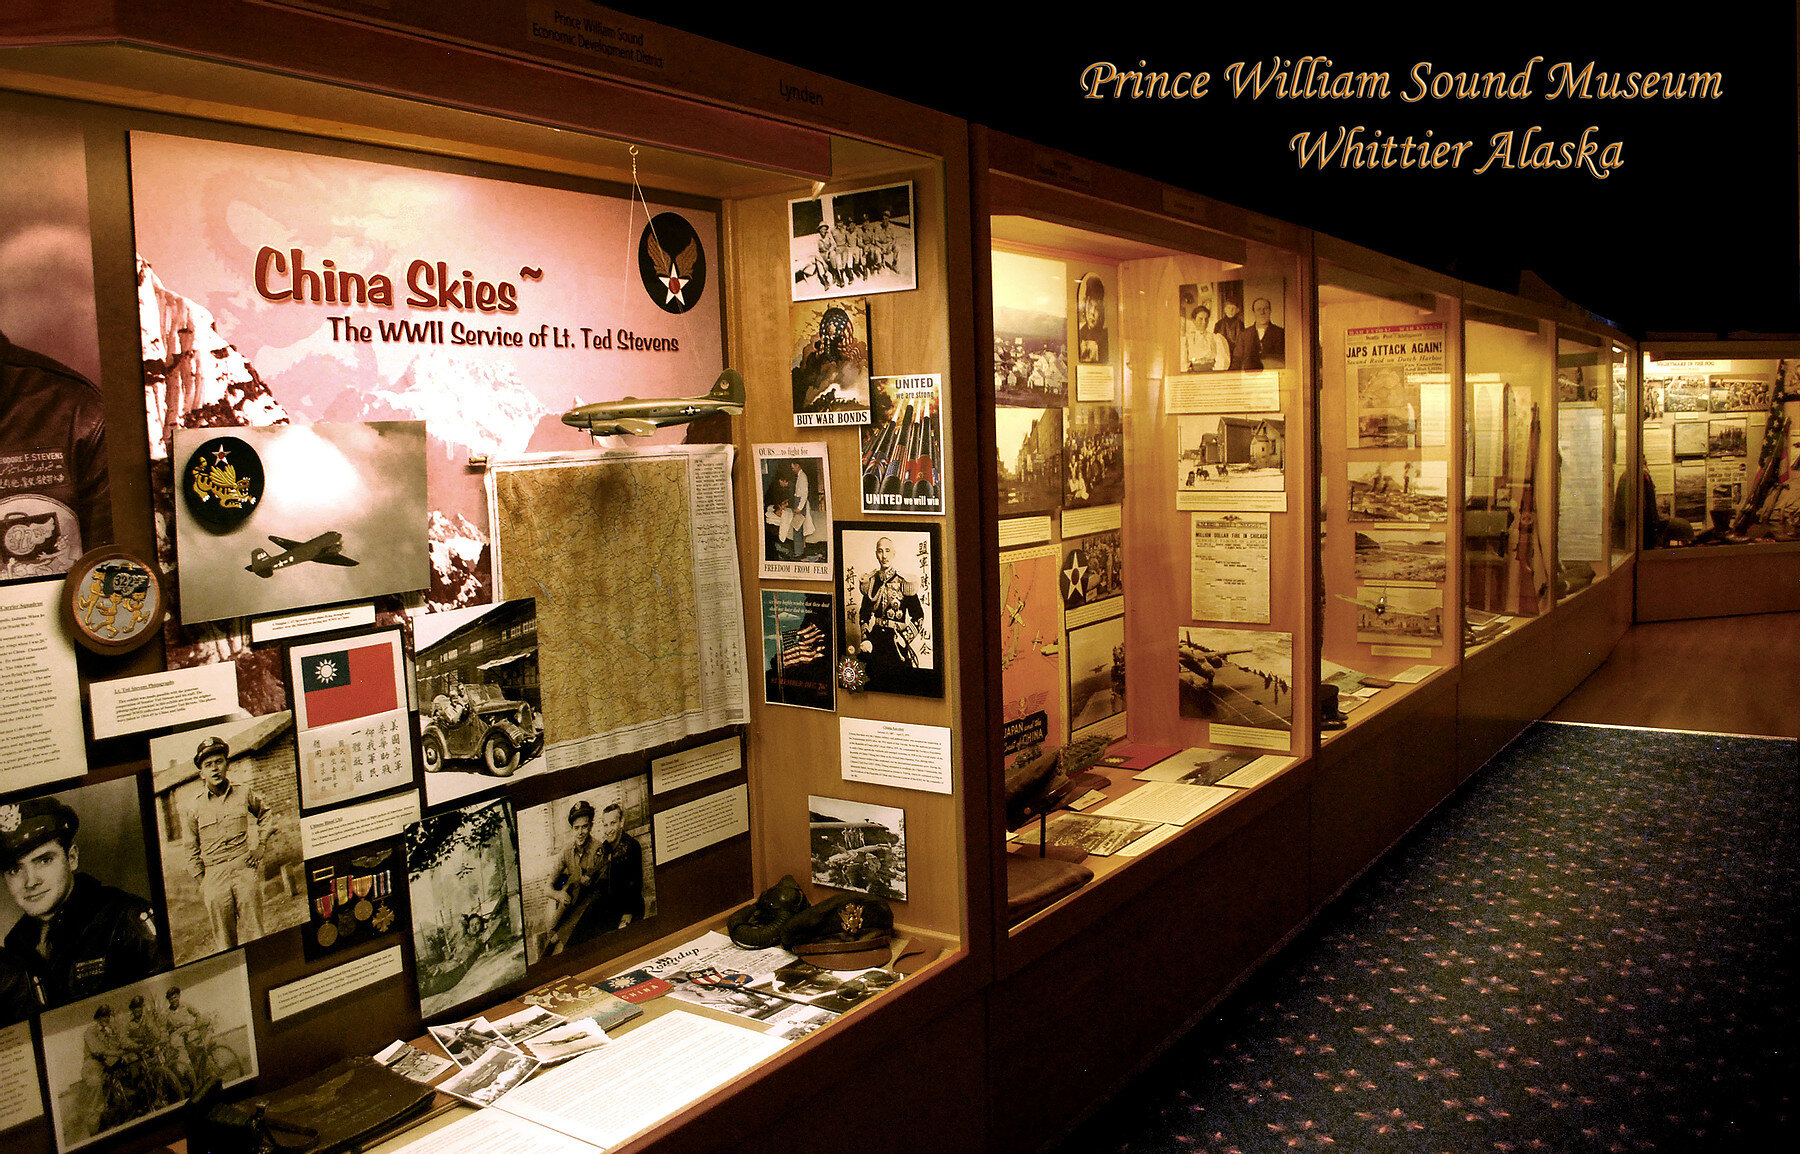 Prince William Sound Museum, Whittier, Alaska